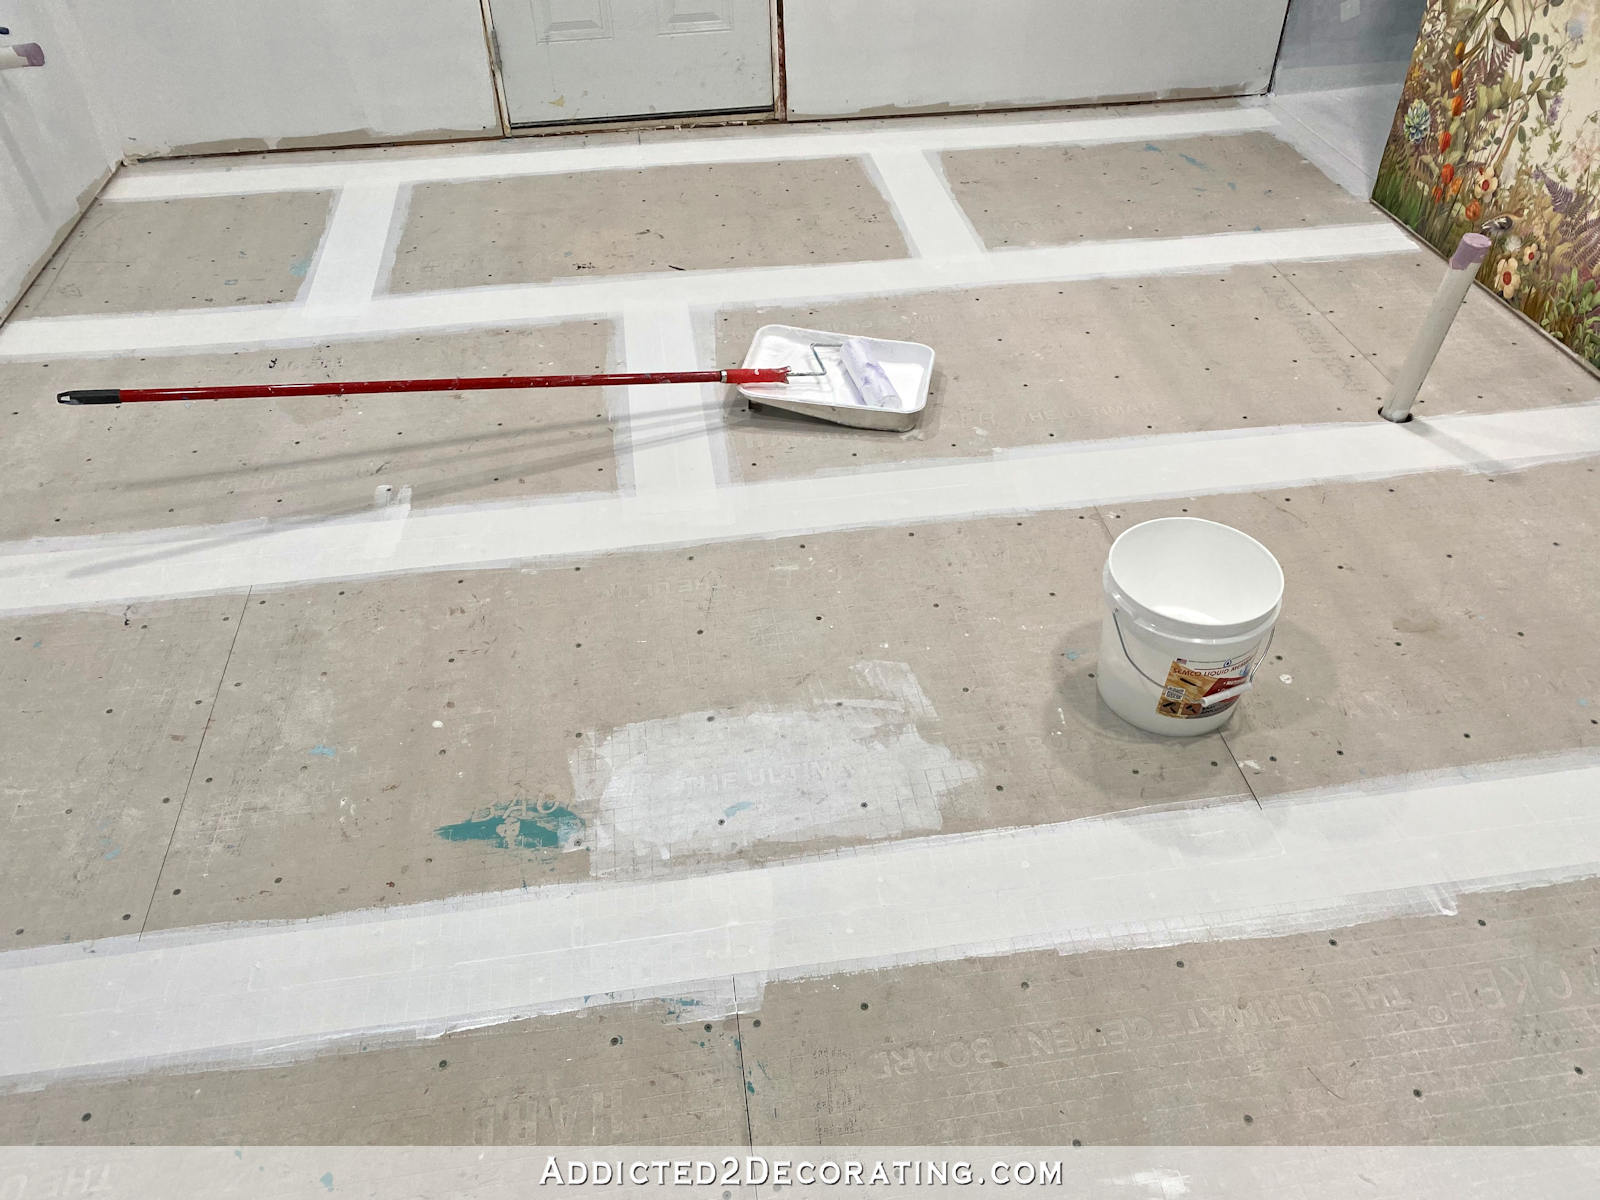 coating bathroom floor joints with Semco waterproofing and crack prevention liquid membrane